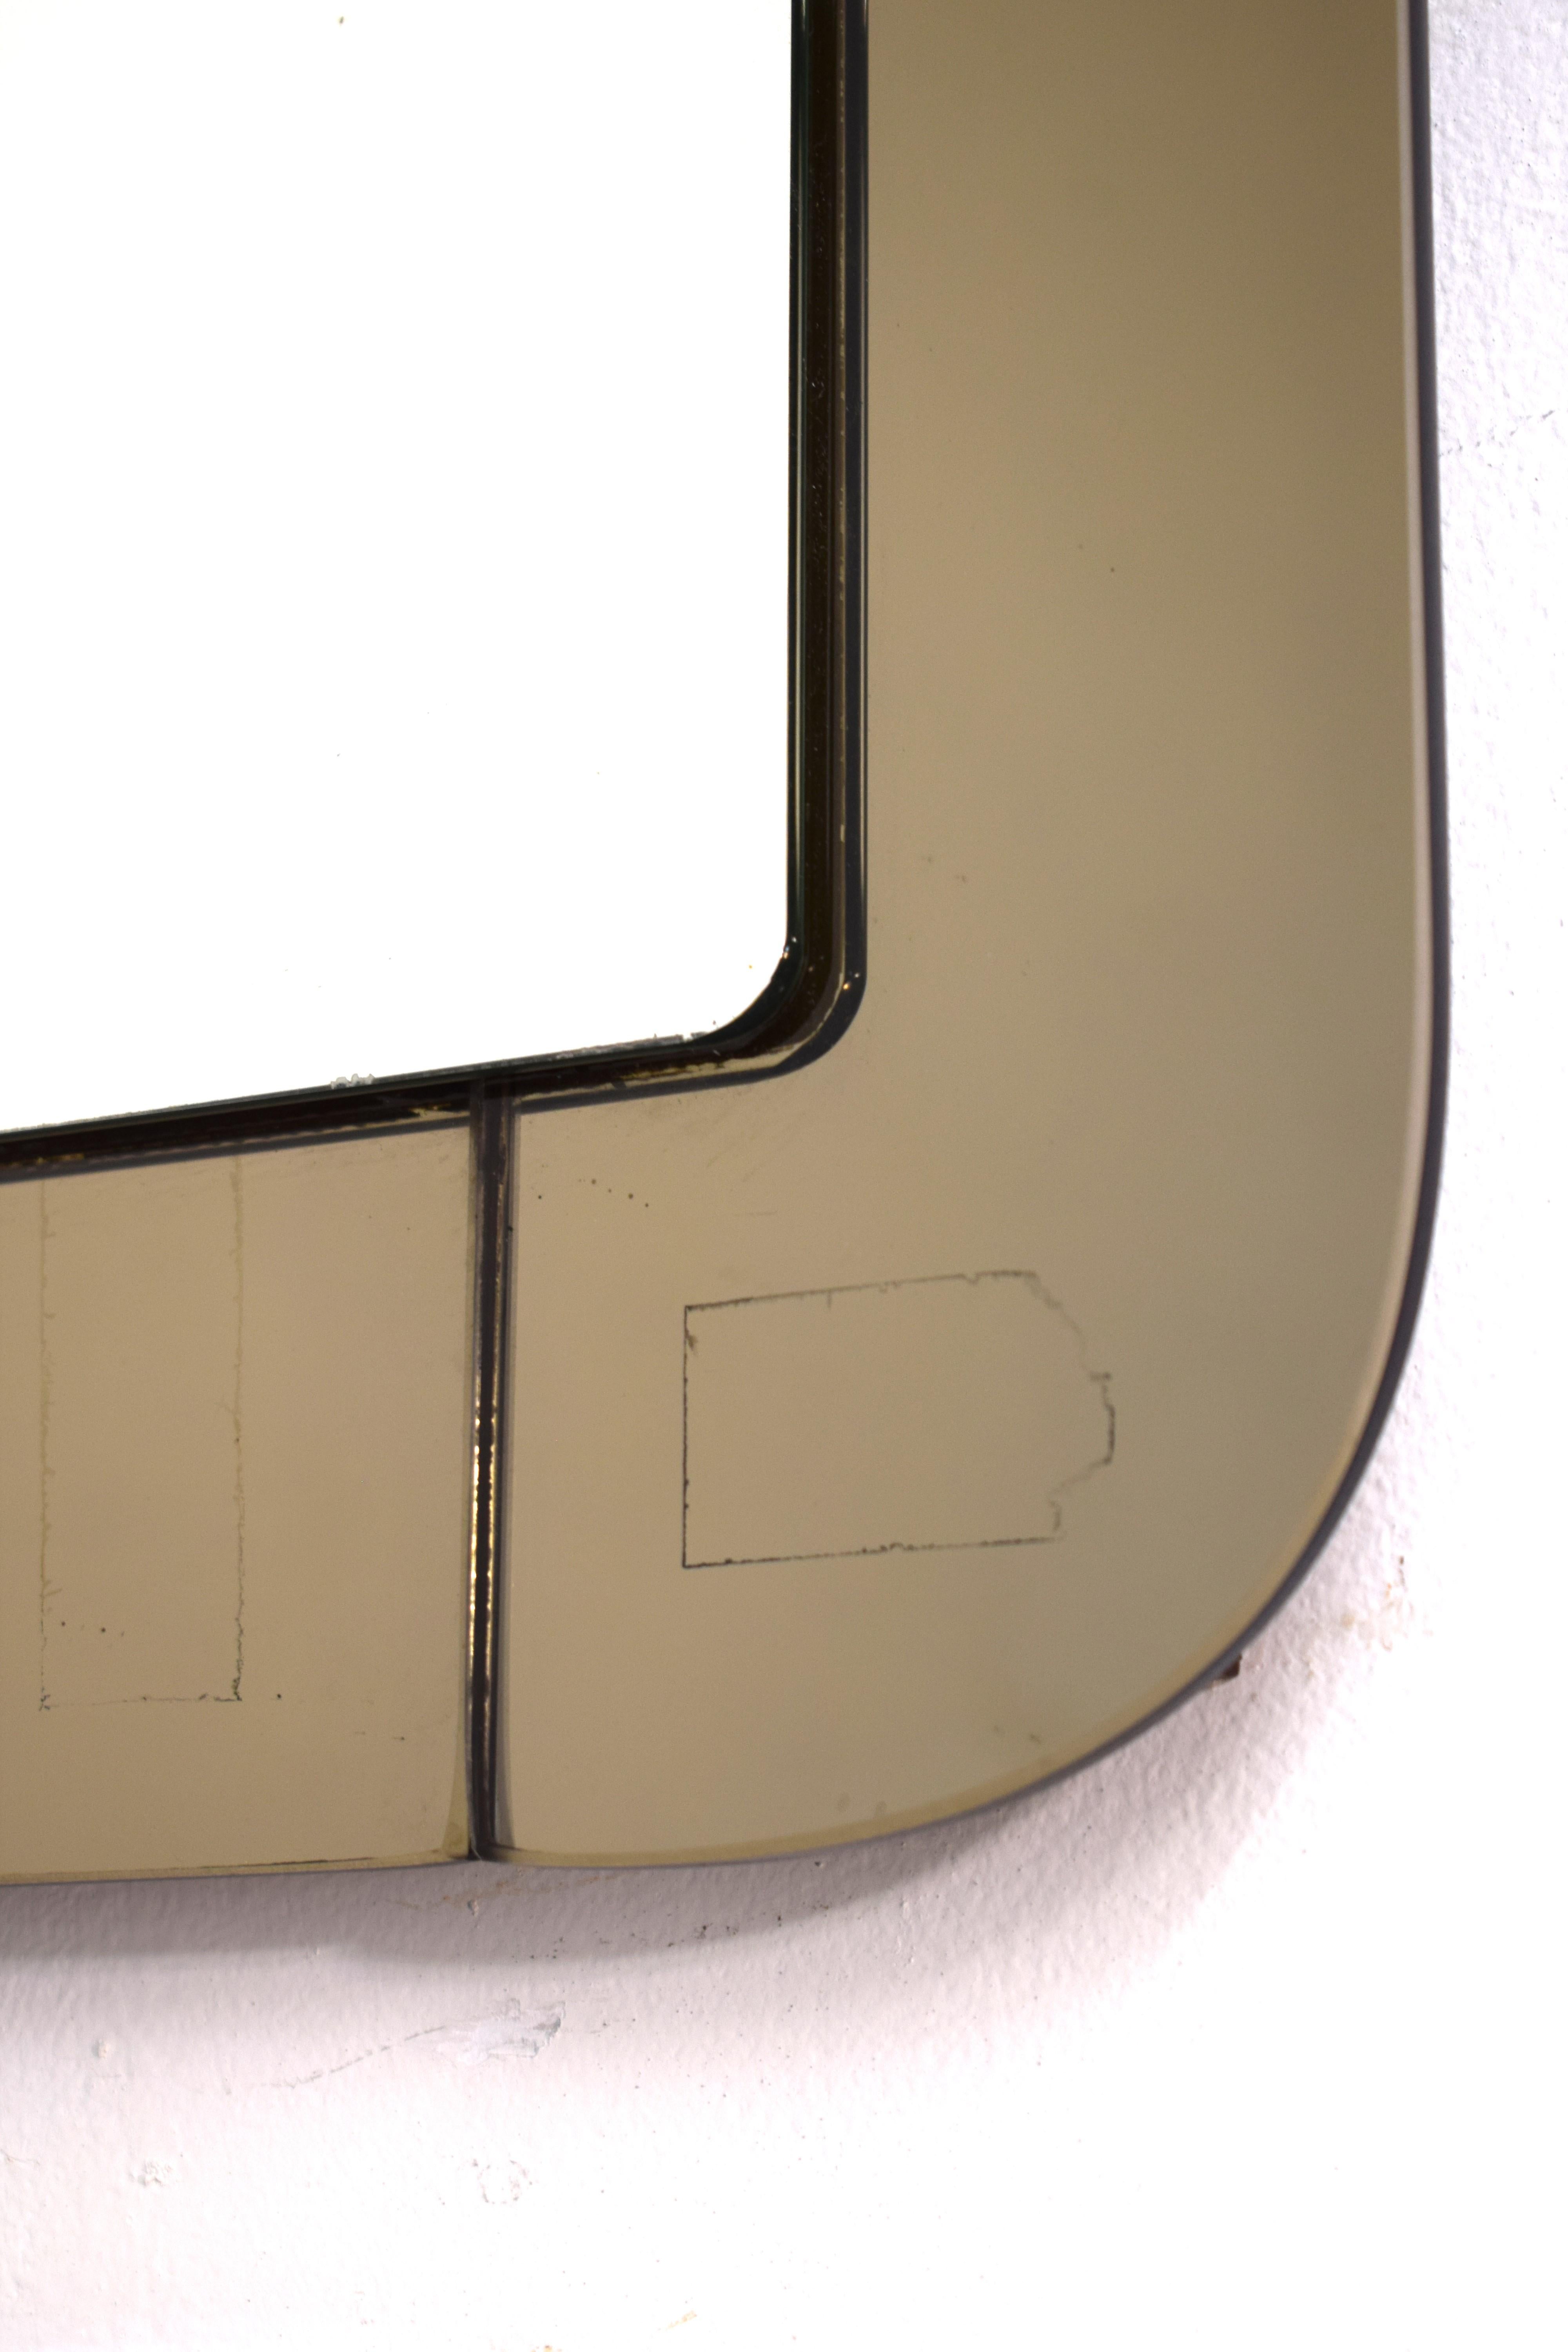 Italian wall mirror, 1960s.

Dimensions: H= 97 cm; W= 68 cm; D= 4 cm.